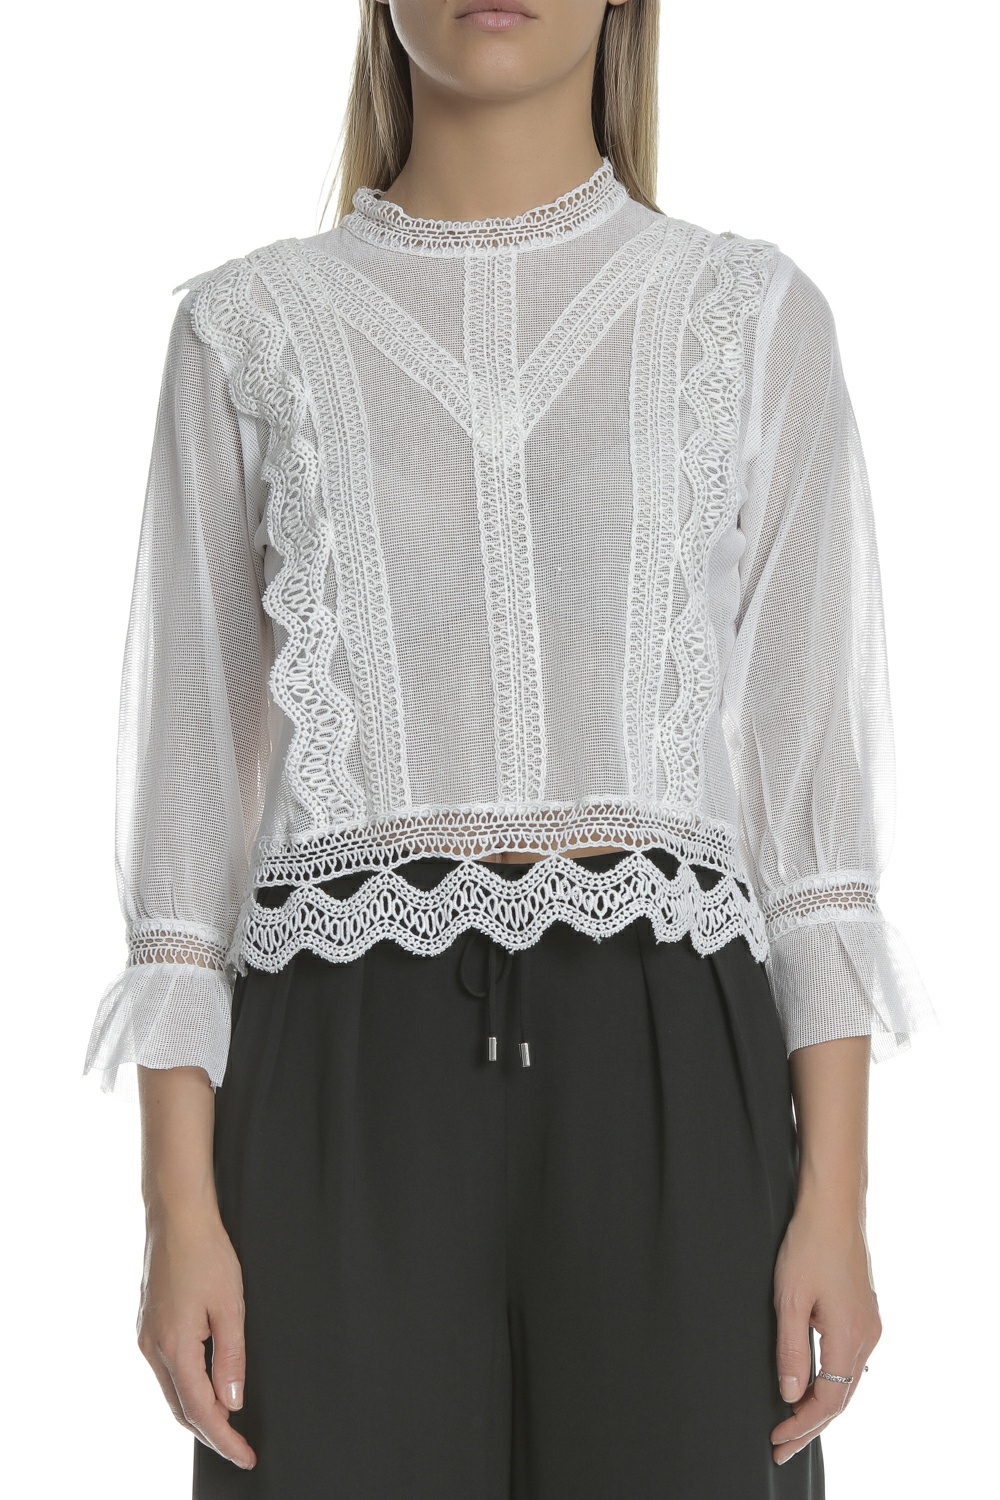 GUESS – Γυναικεία μακρυμάνικη μπλούζα ZELDA GUESS λευκή